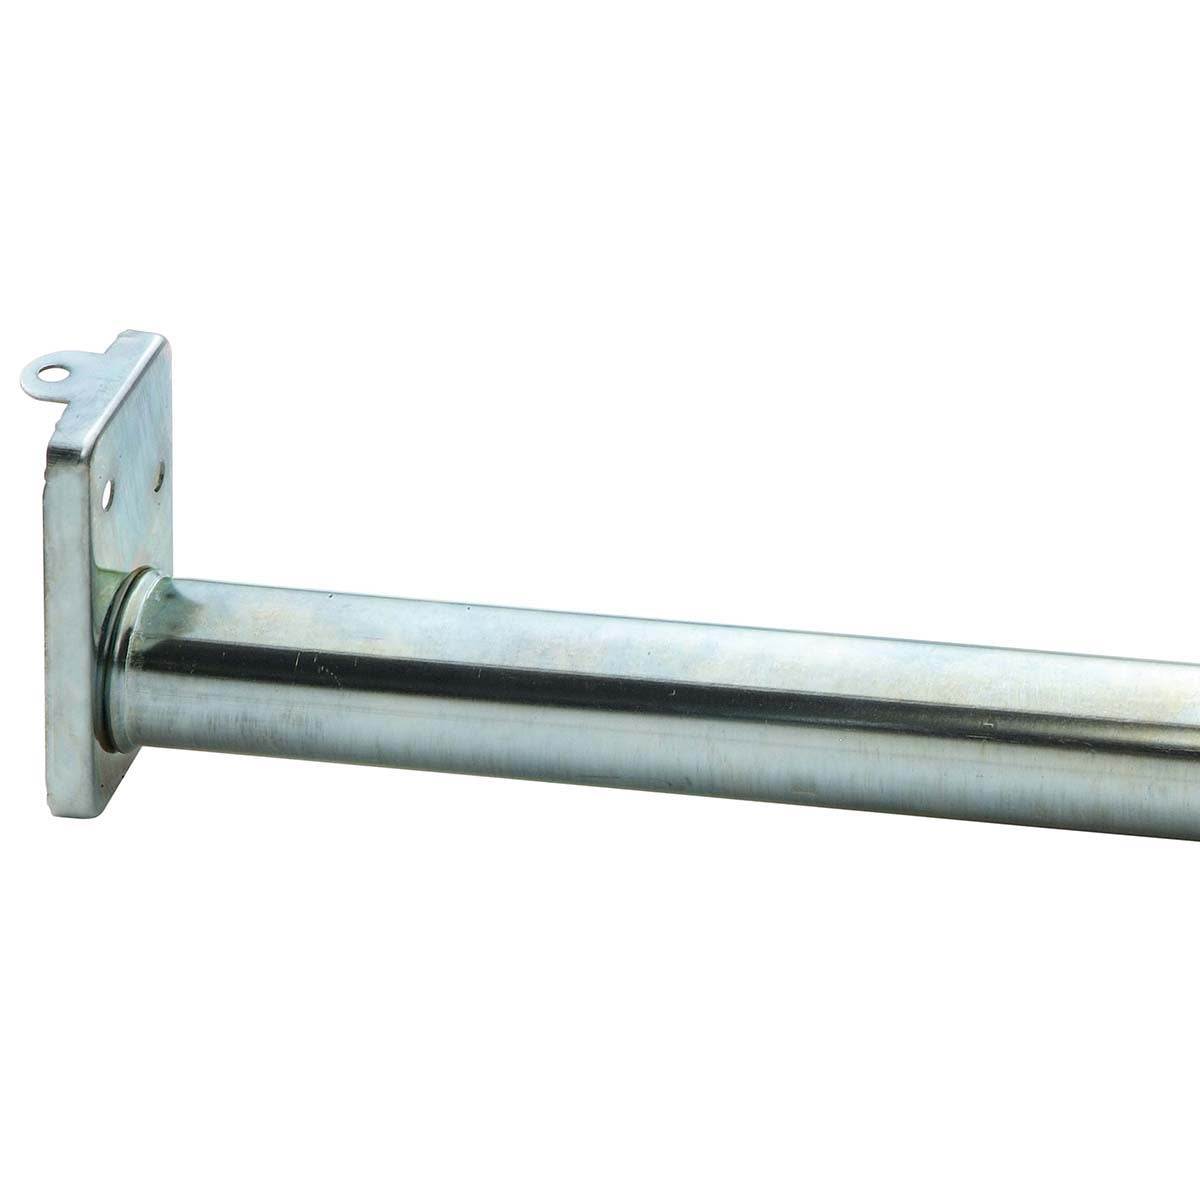 72"-96" Adjustable Metal Closet Rod, Zinc